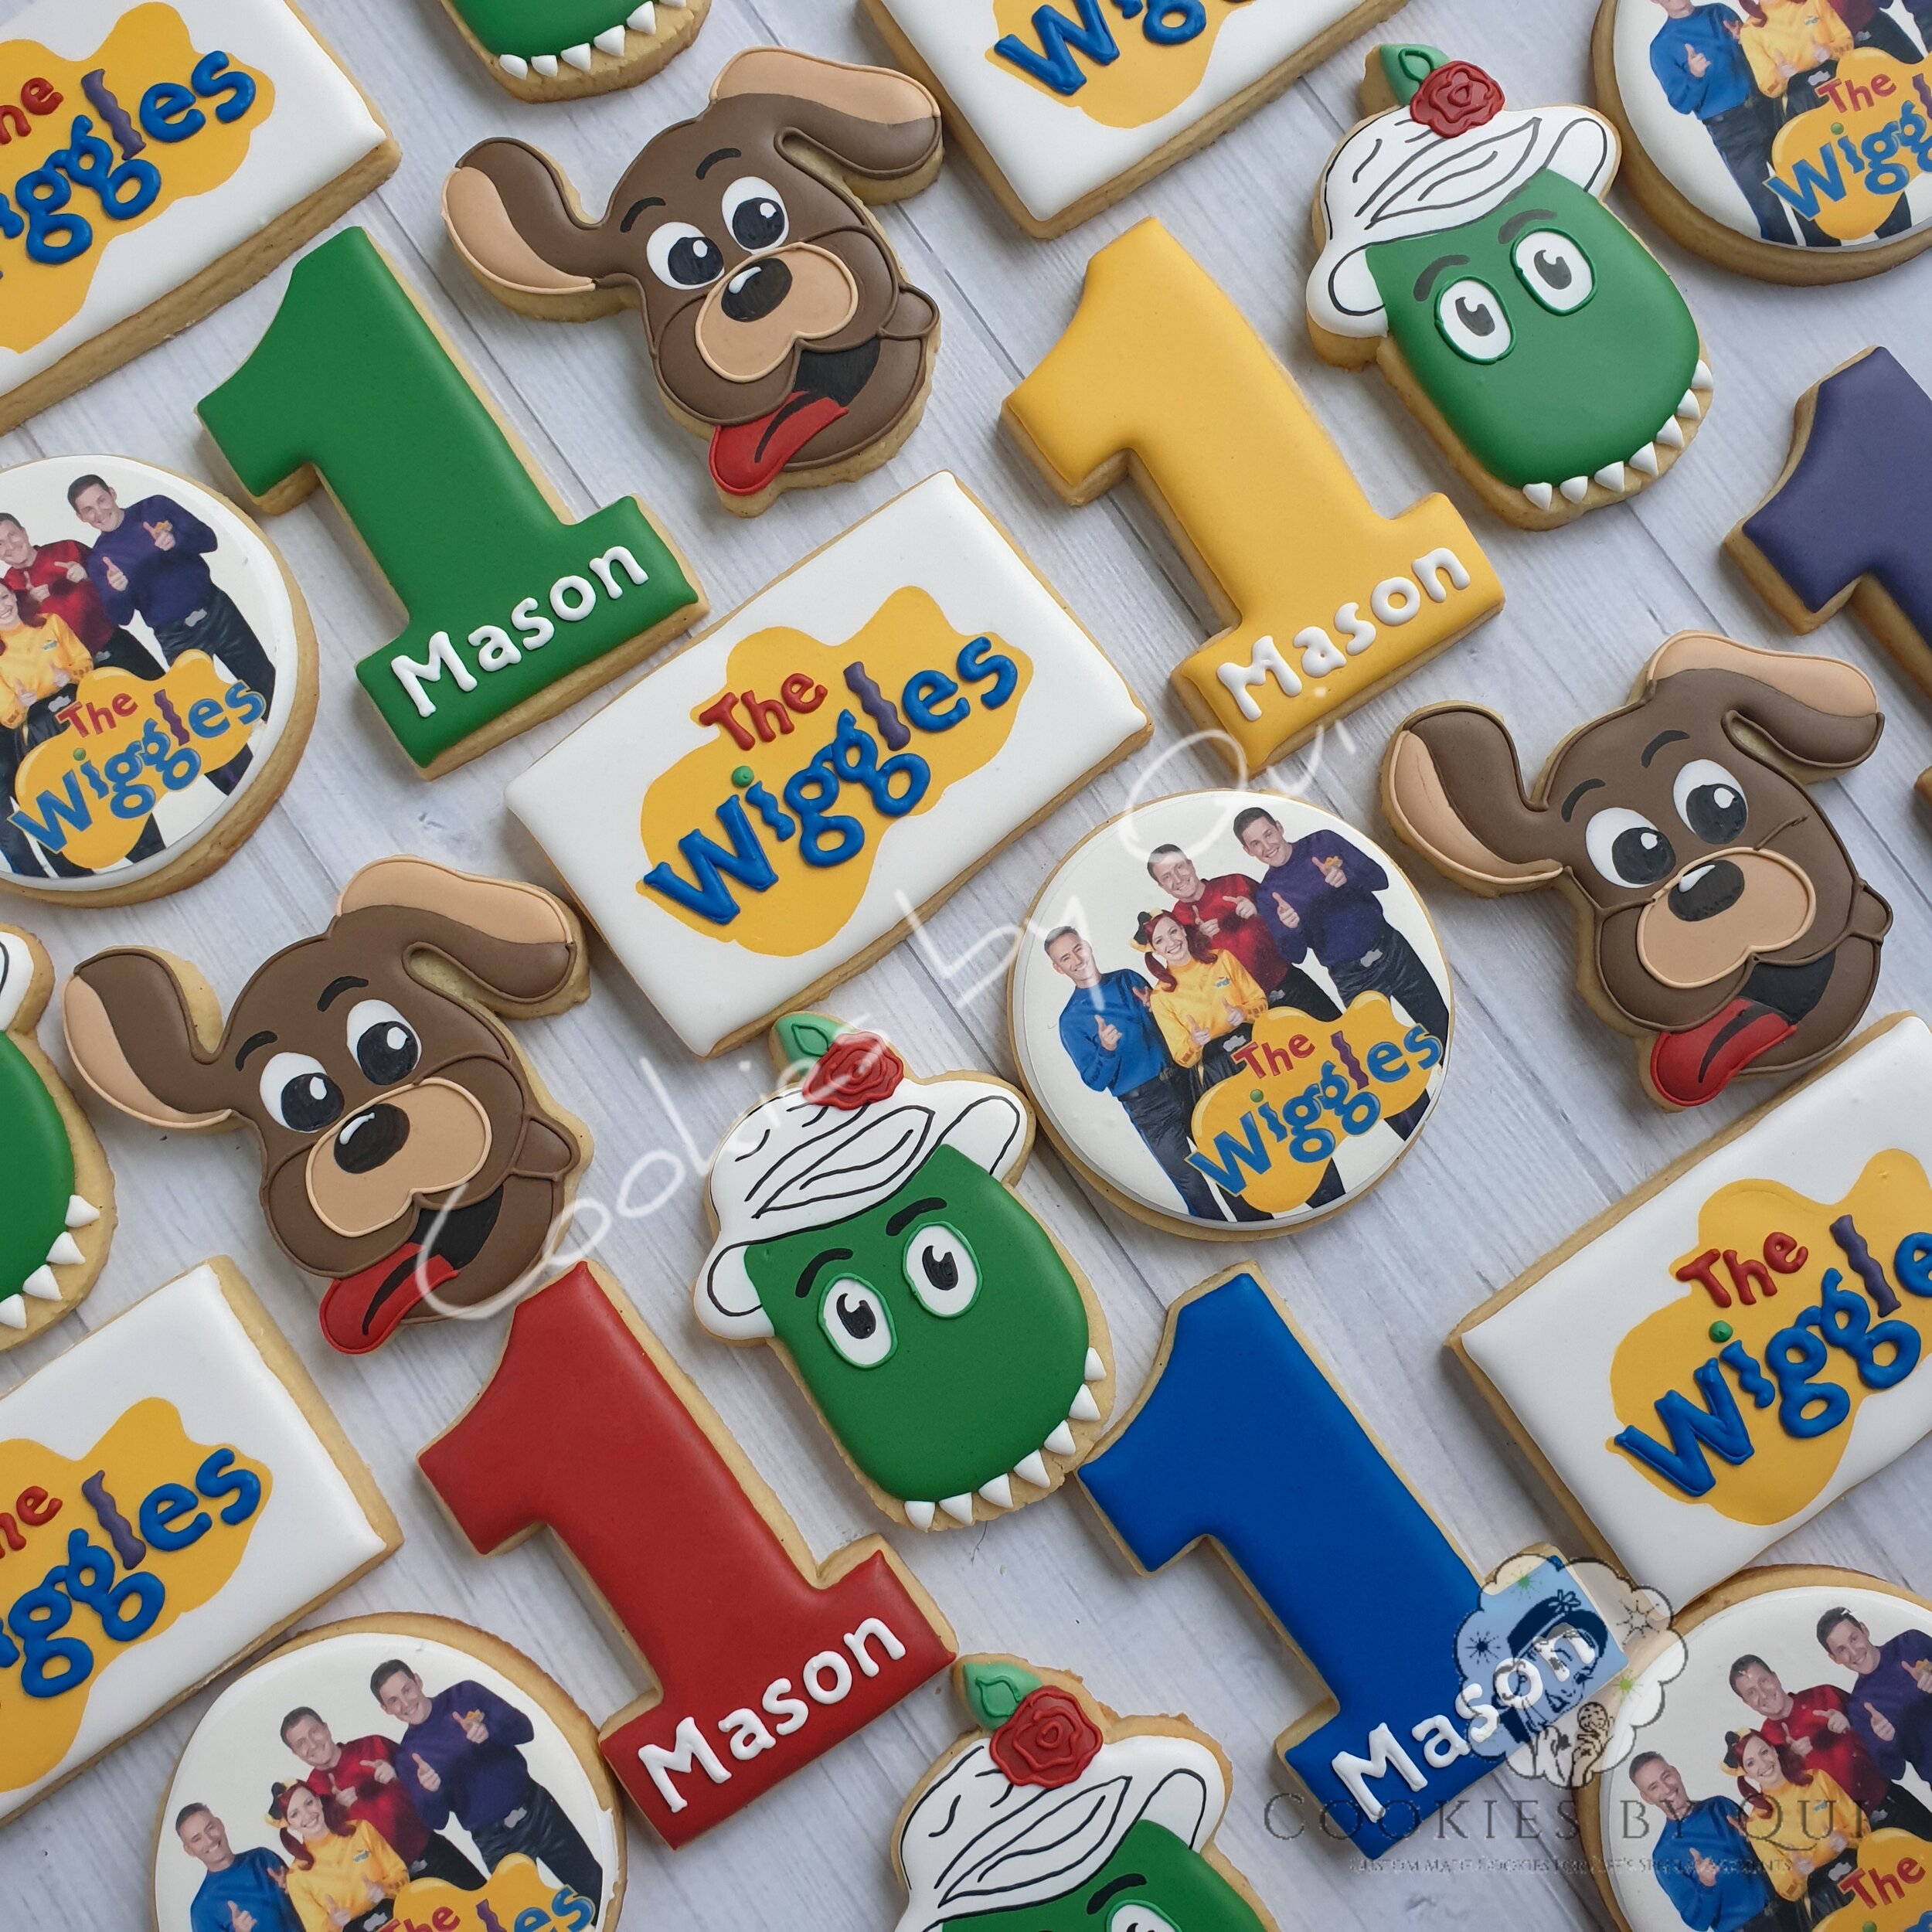 The Wiggles 1st Birthday Cookies Wags Dorothy - Cookies by Qui Geelong.jpg